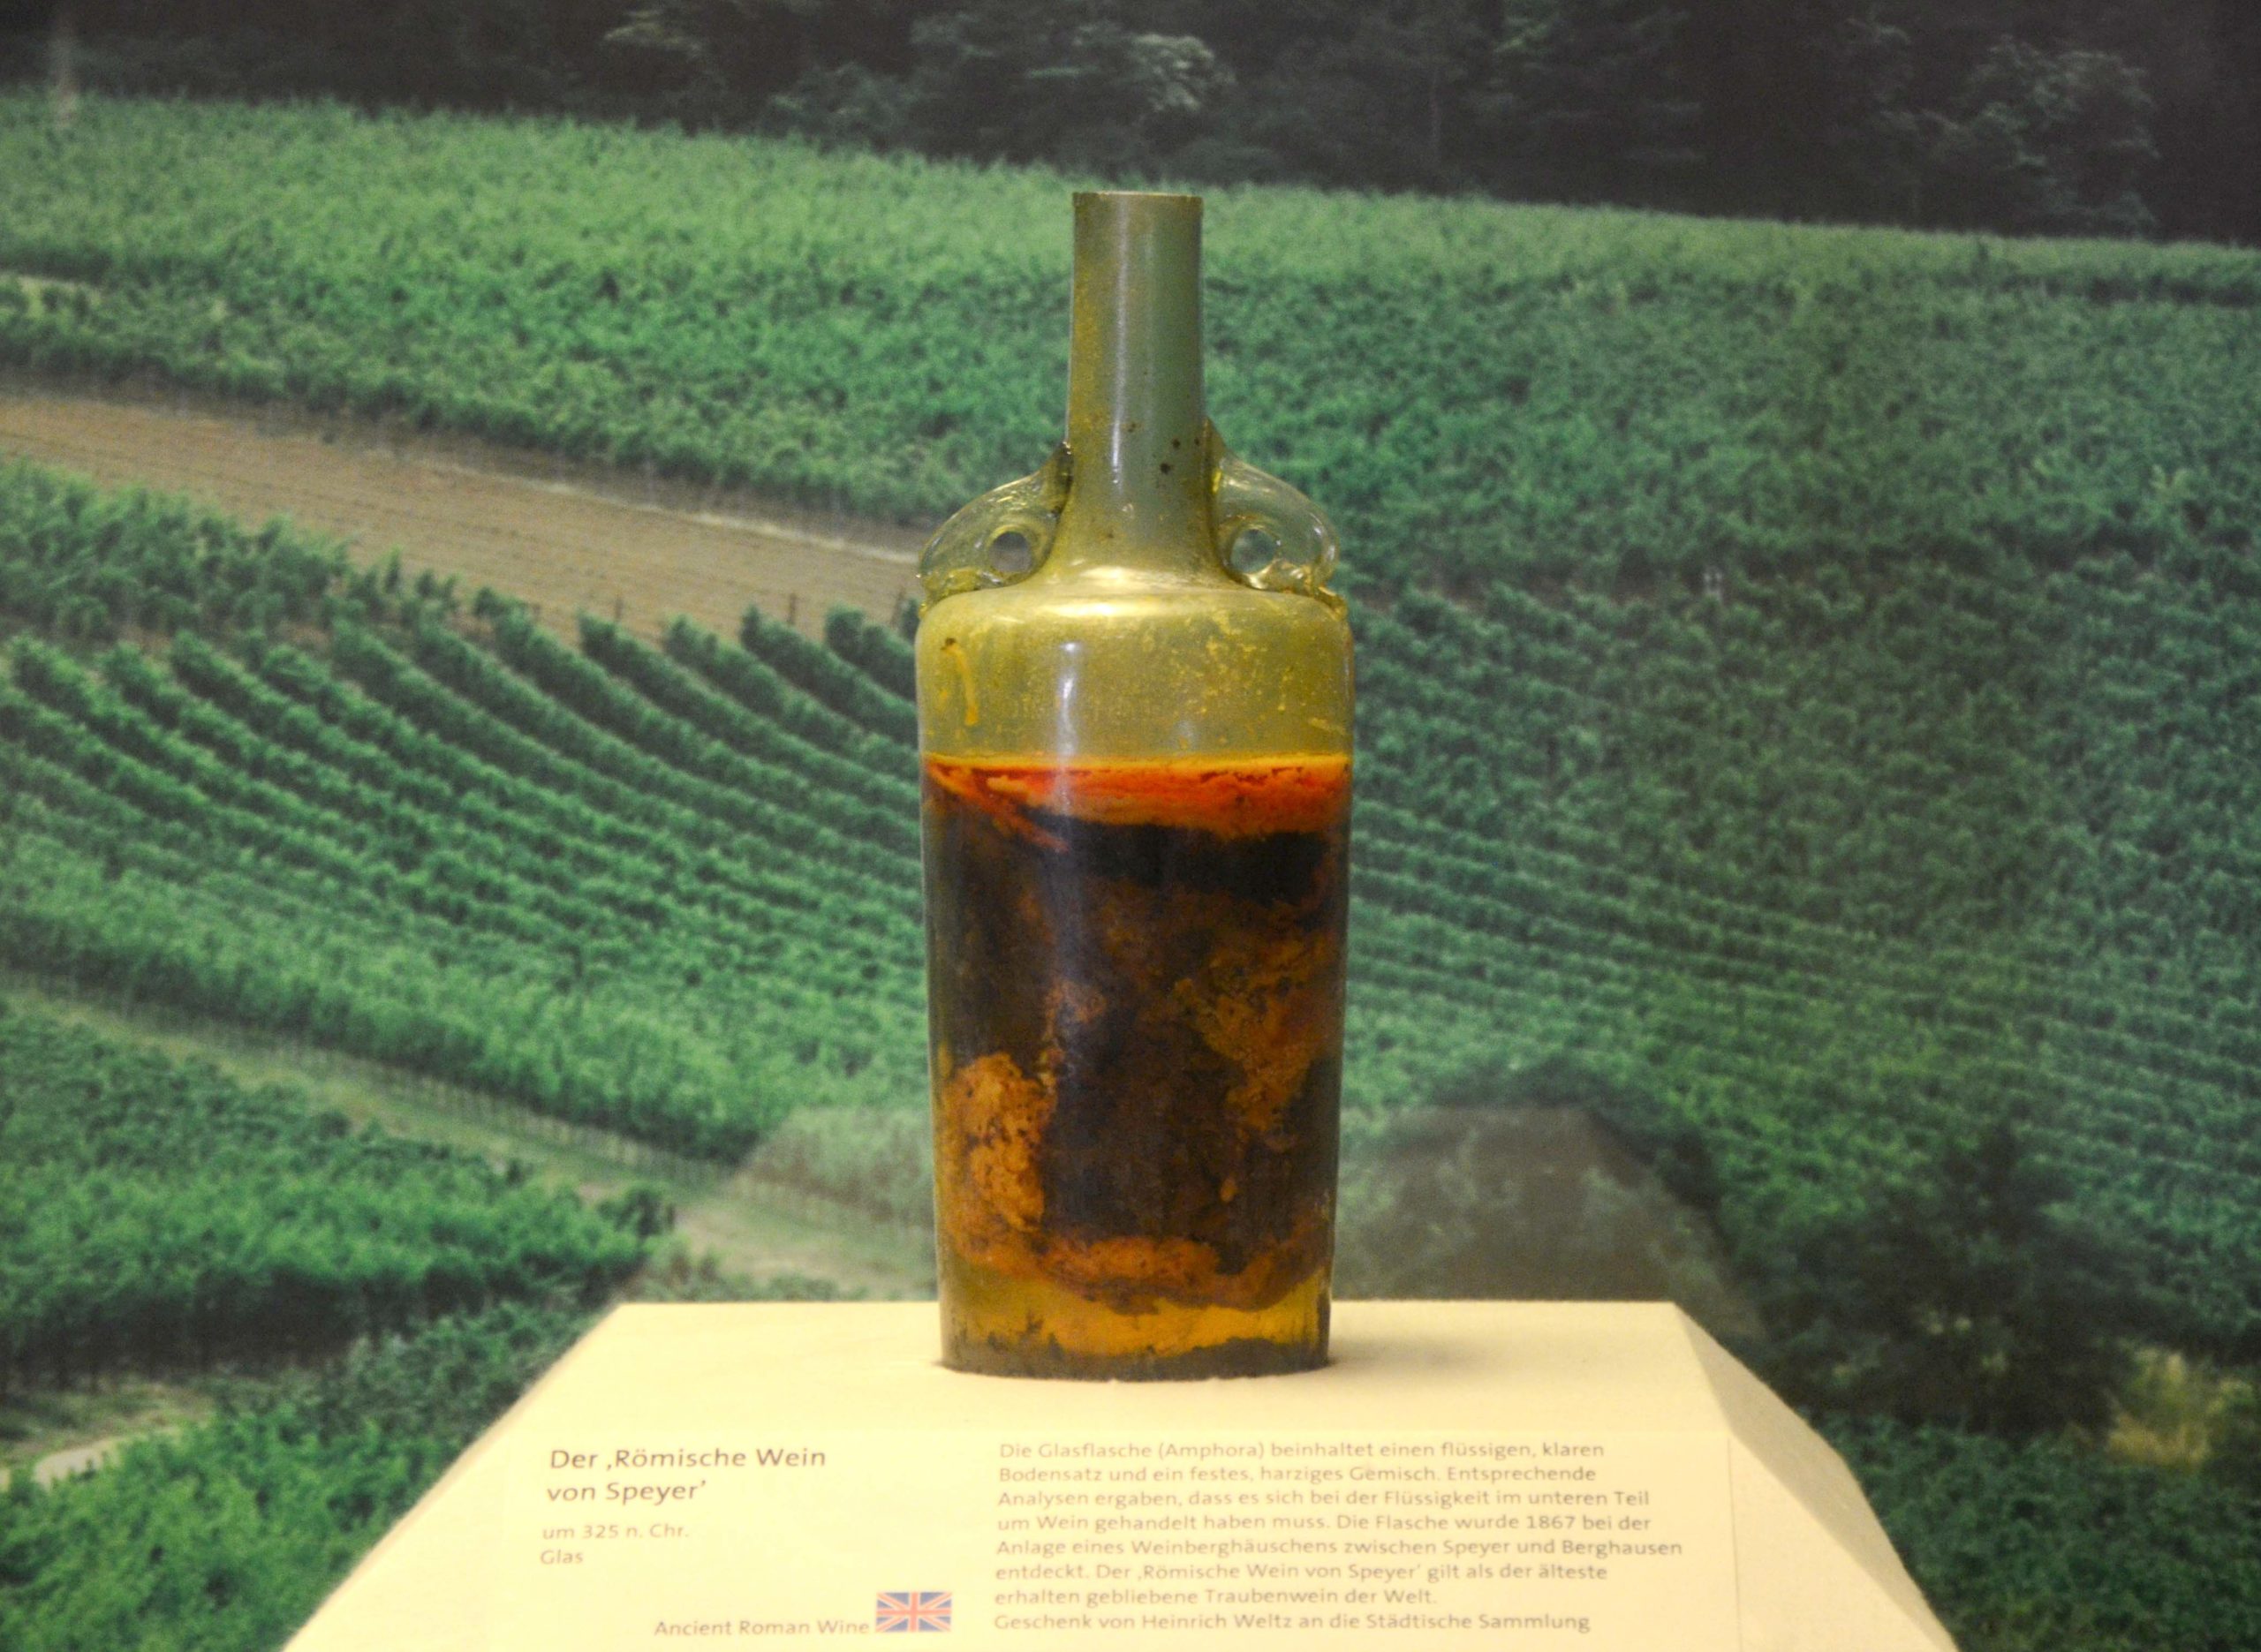 Le plus vieux vin du monde à Spire en Allemagne © Carole Raddato - licence [CC BY-SA 2.0] from Wikimedia Commons